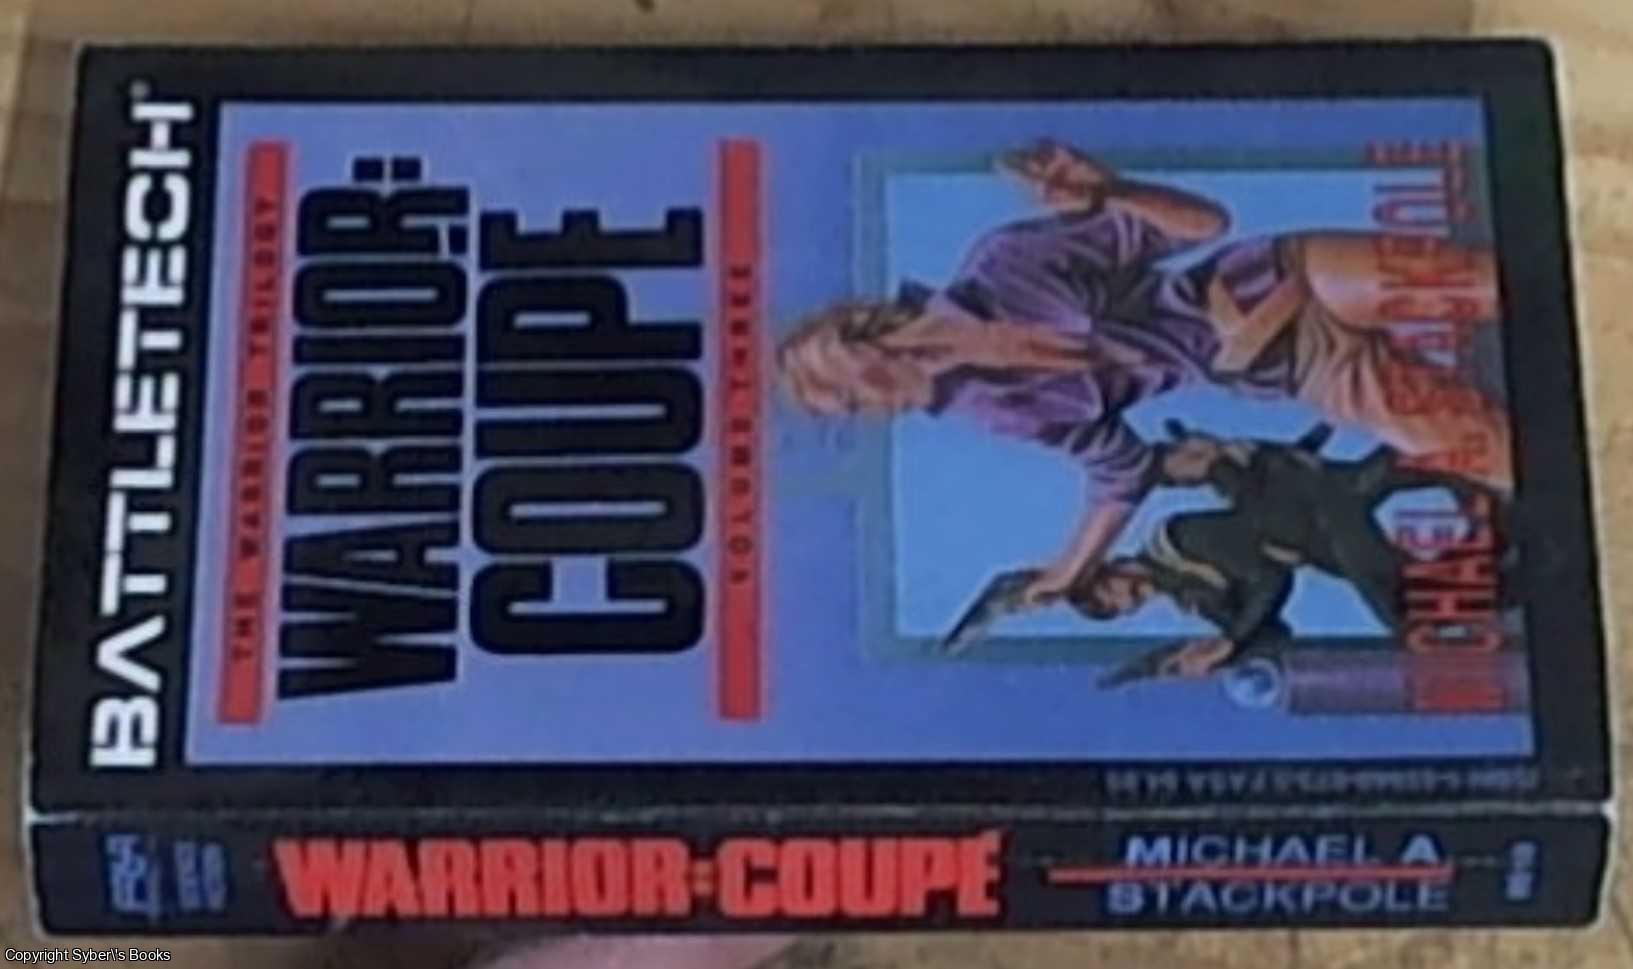 Stackpole, Michael A. - Warrior: Coupe (Battletech, Warrior Trilogy, Vol. 3)